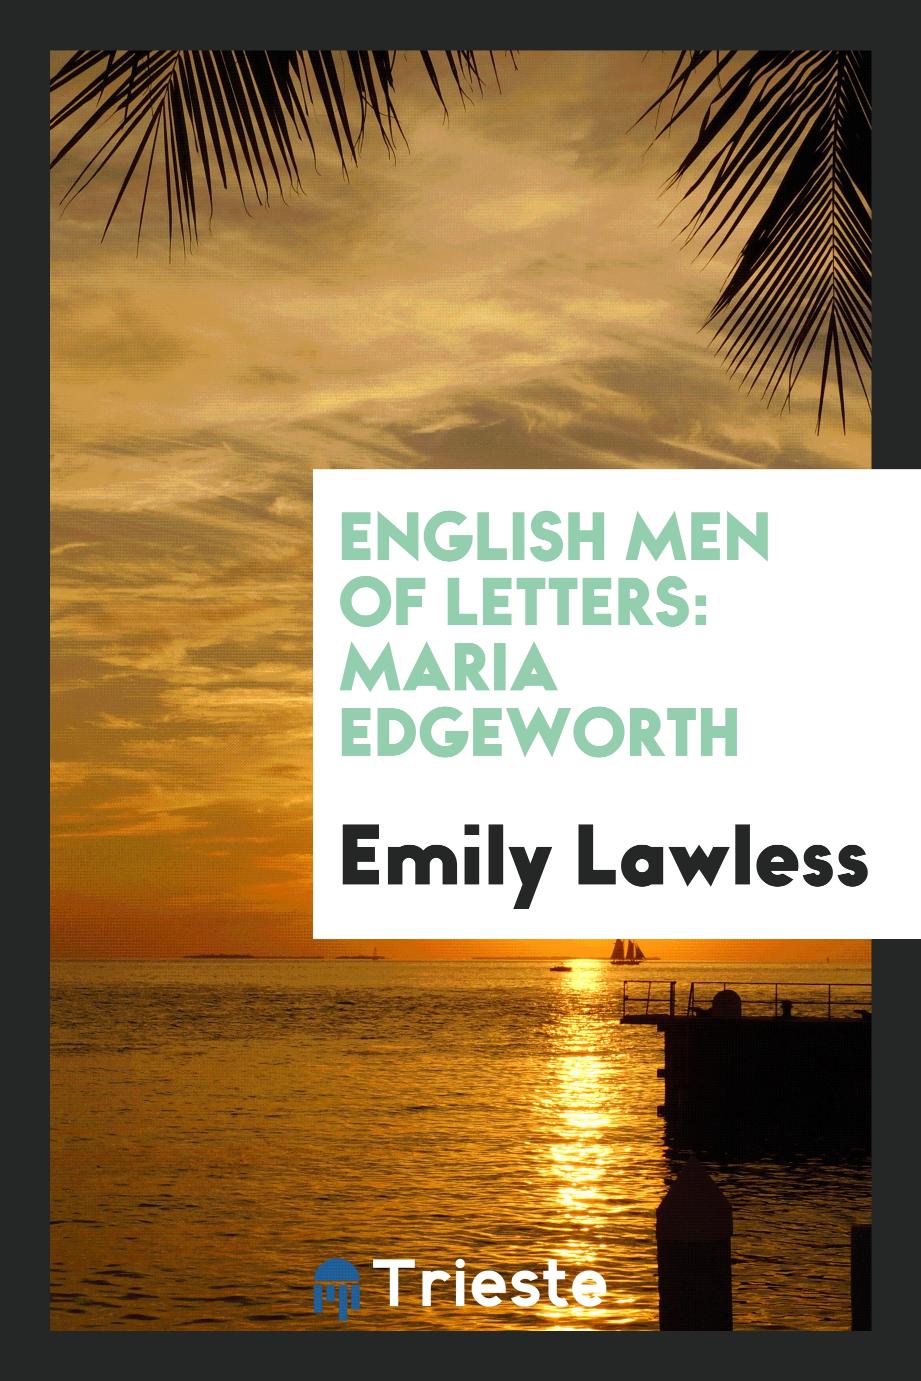 English men of letters: Maria Edgeworth